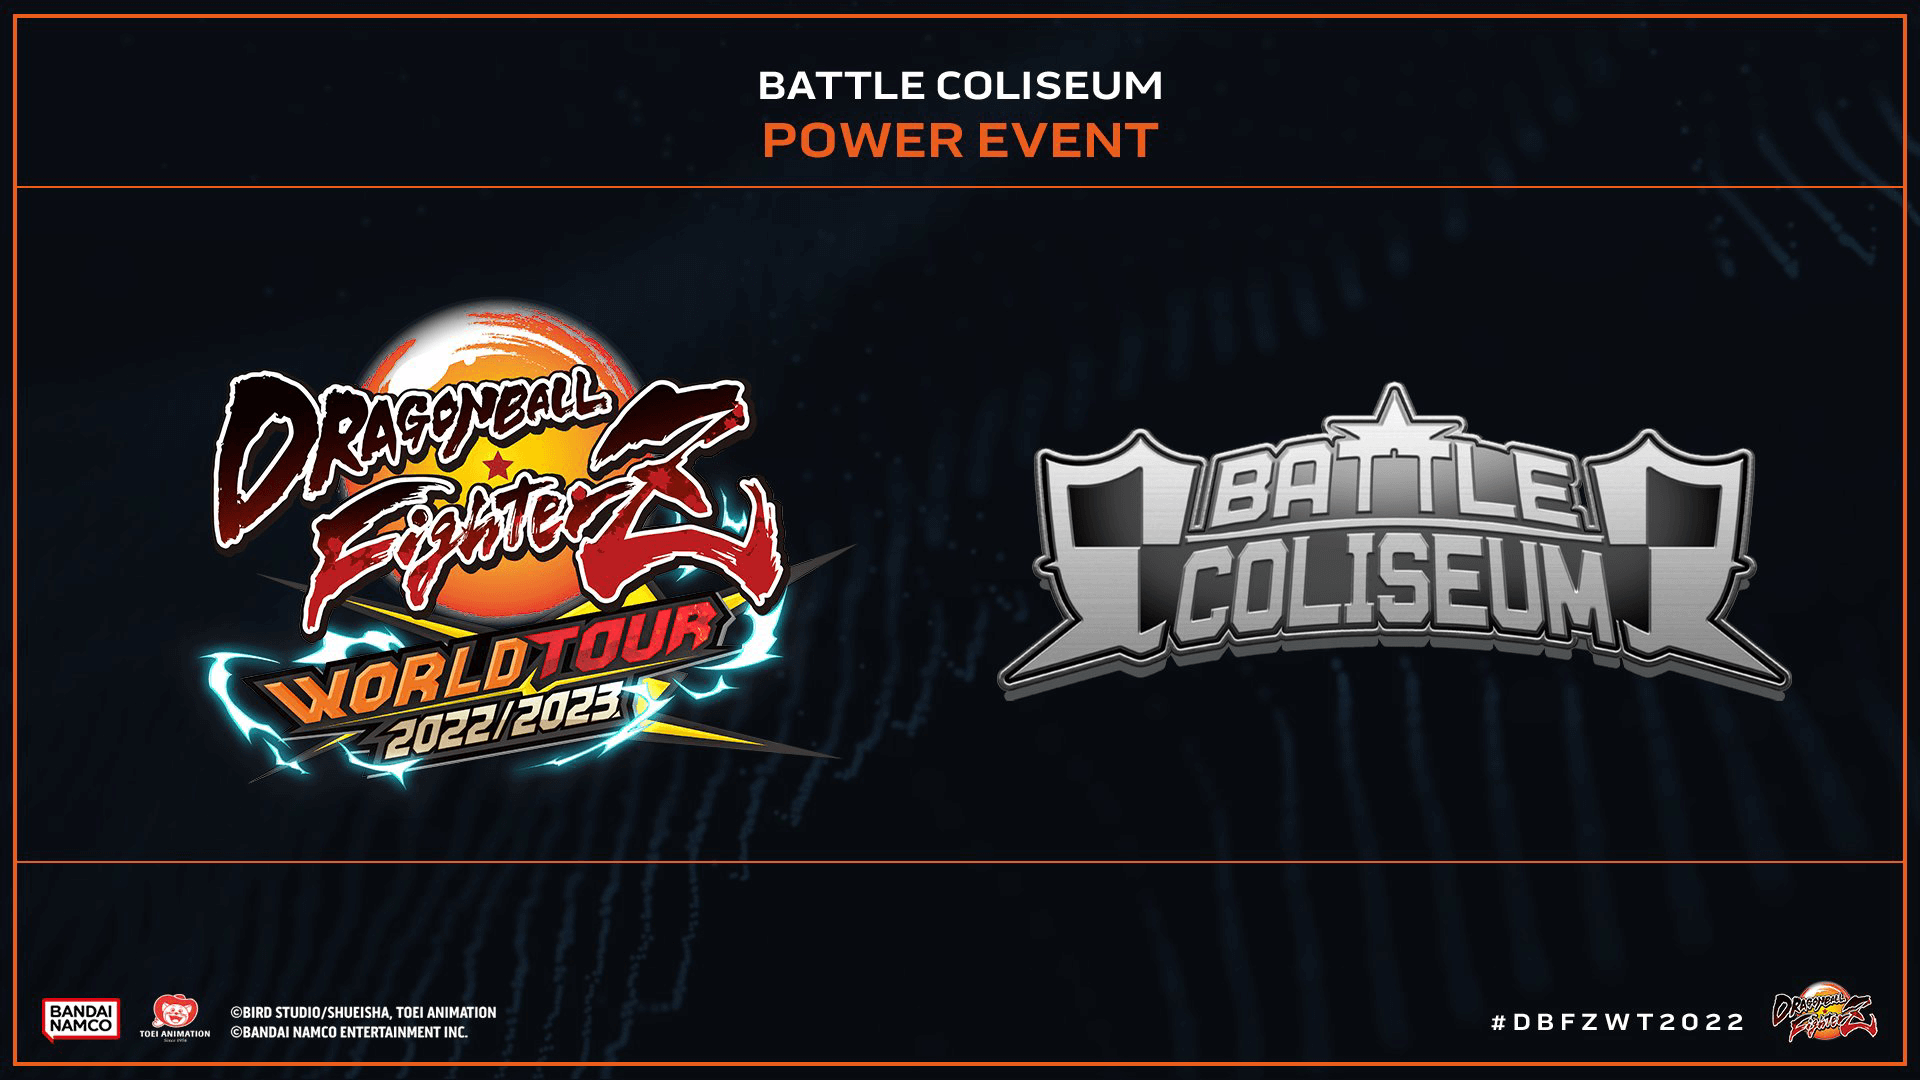 DBFZ at Battle Coliseum 2022: Power Event in Brazil